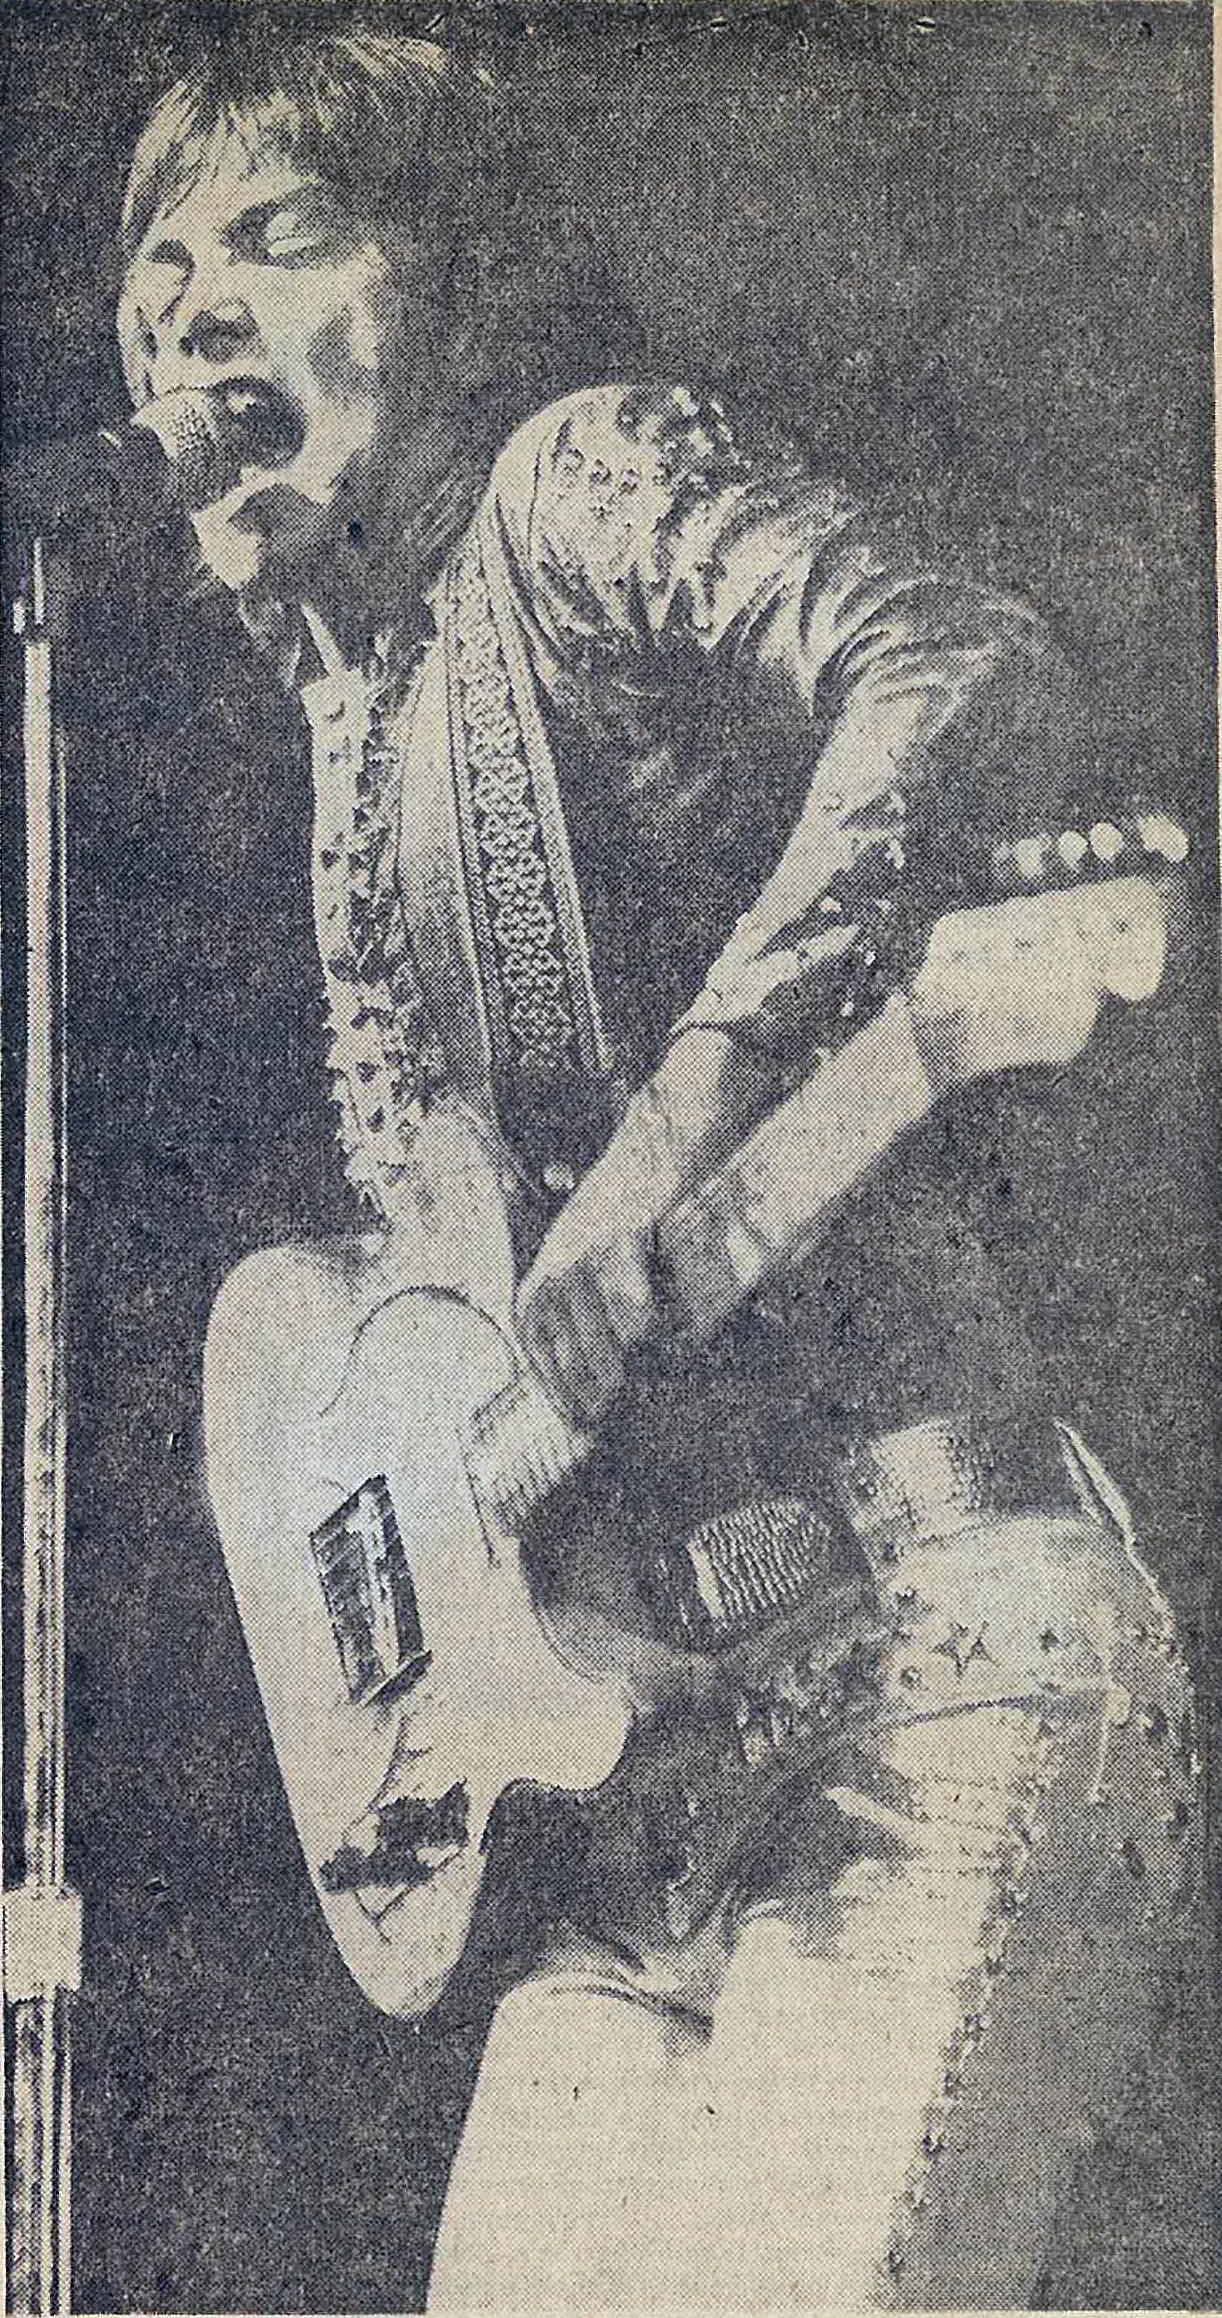 David on stage on Sept 1, 1972